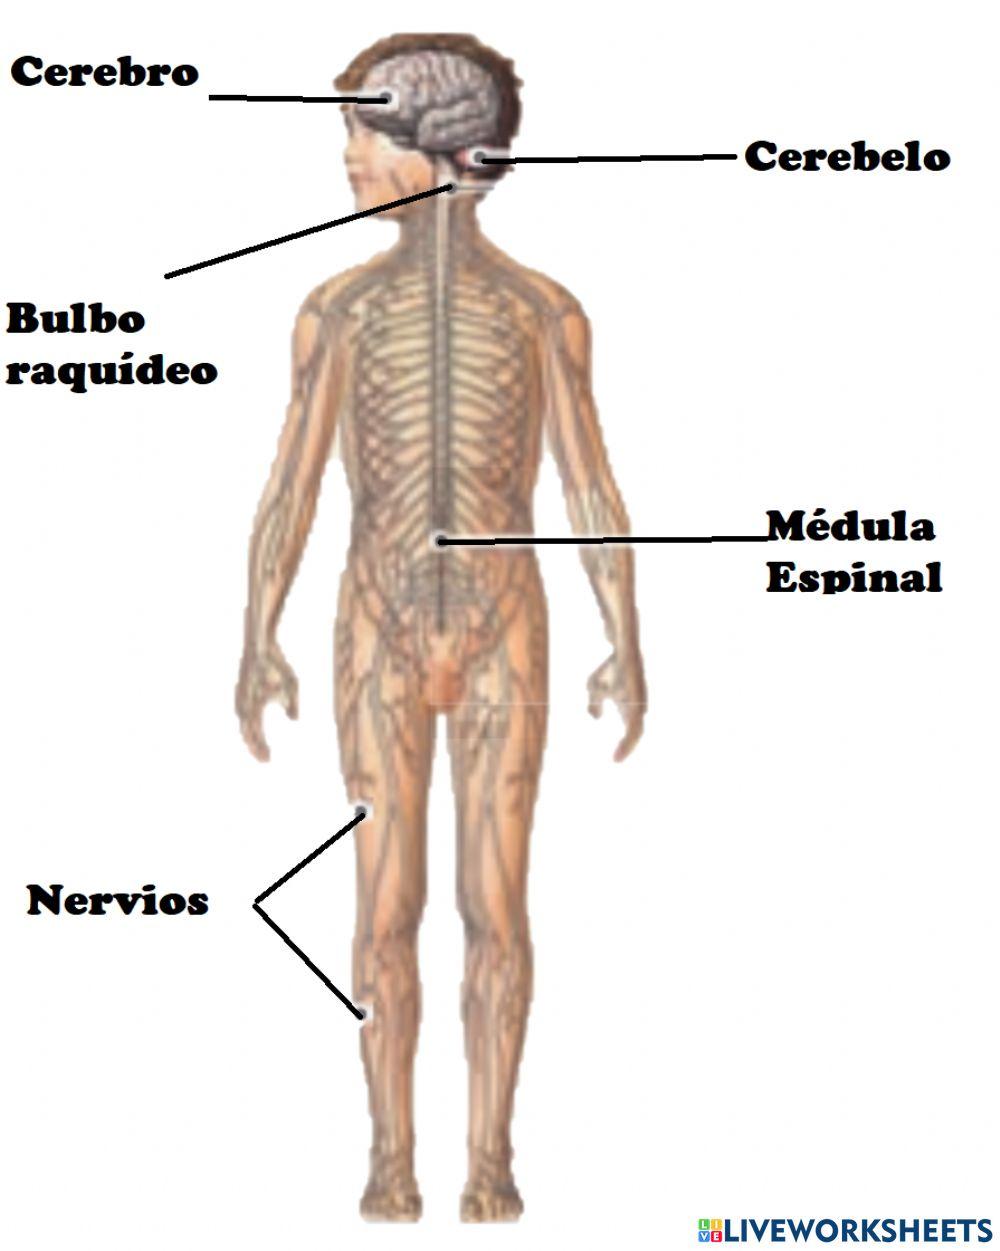 Partes del sistema nervioso